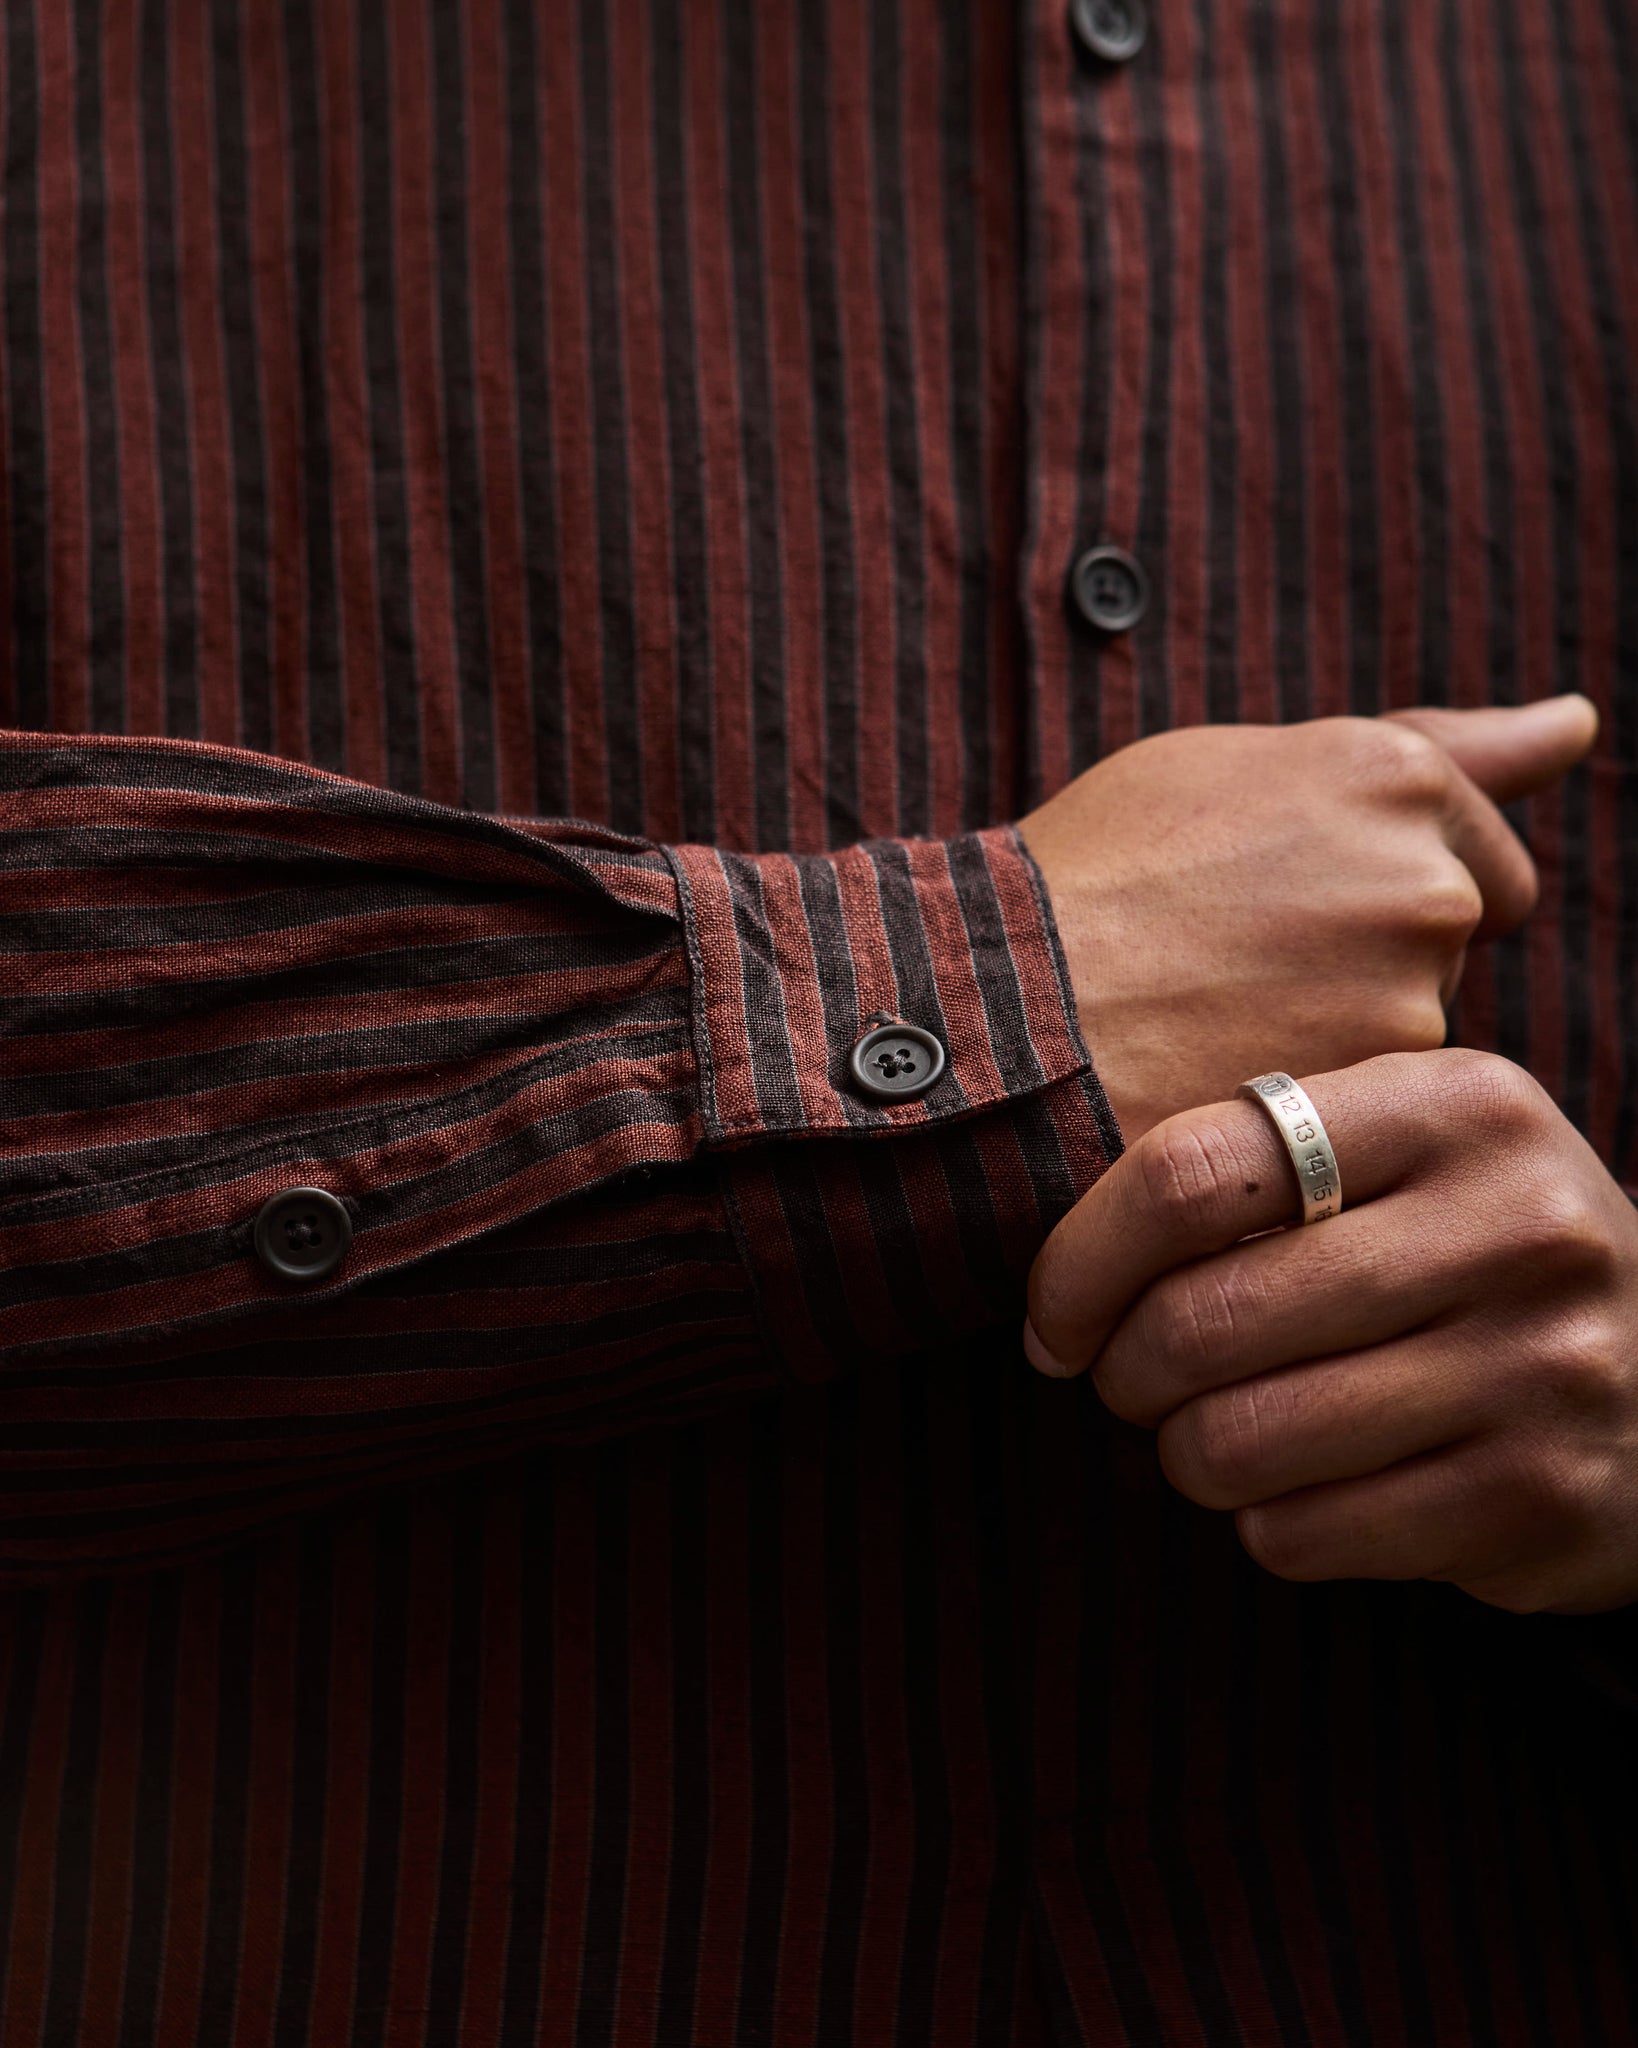 Evan Kinori Pop Over Shirt, Navy/Red Linen Stripe